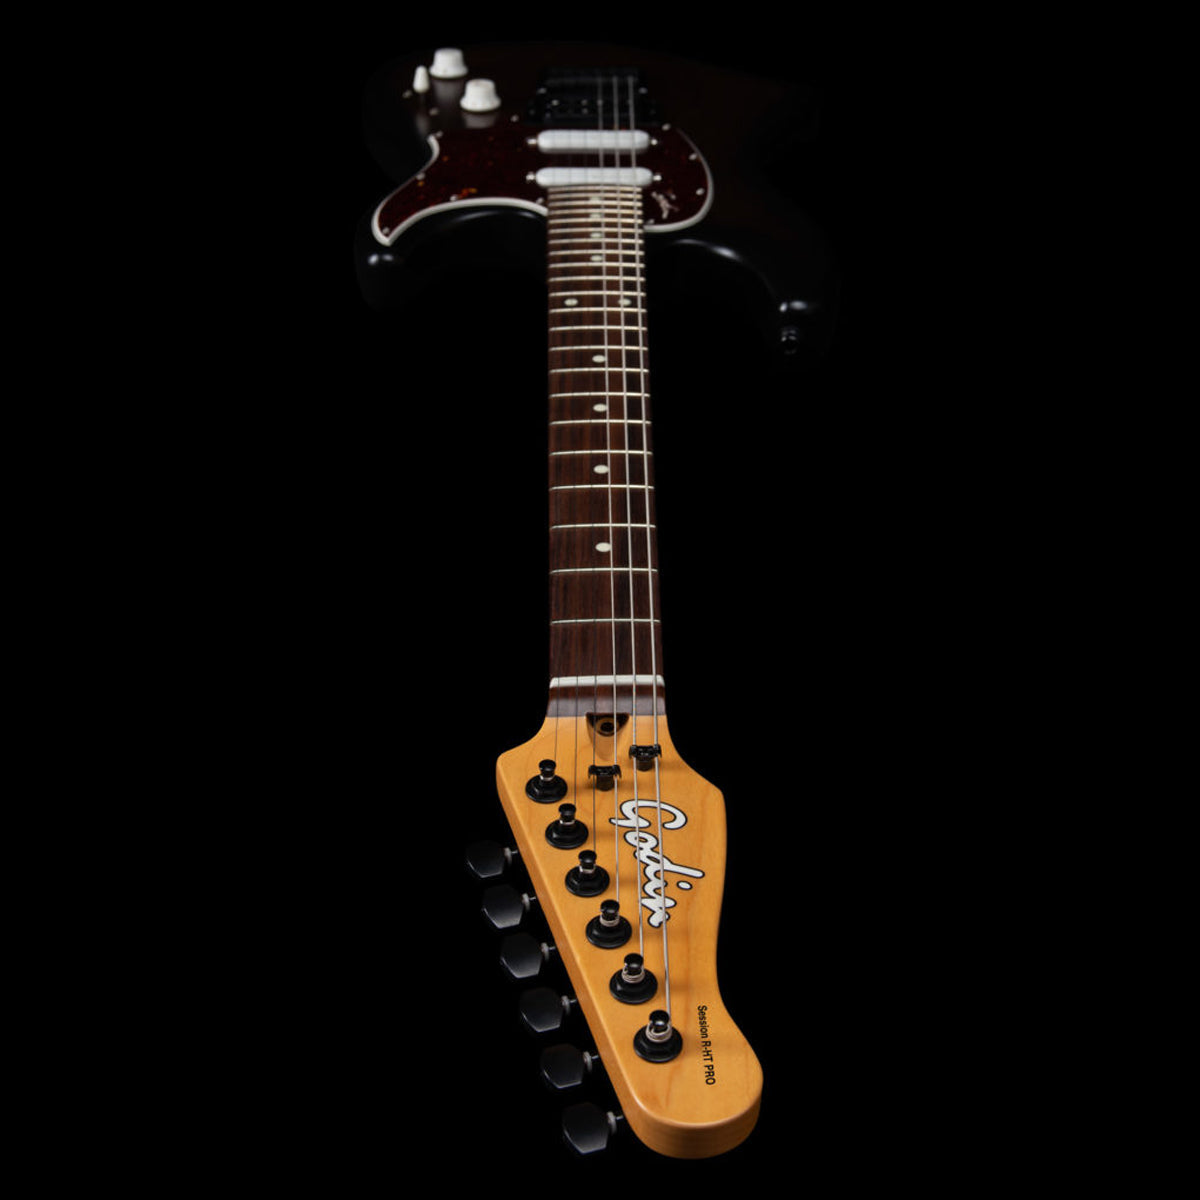 Godin Session RHT Pro Electric Guitar ~ Bourbon Burst, Electric Guitar for sale at Richards Guitars.